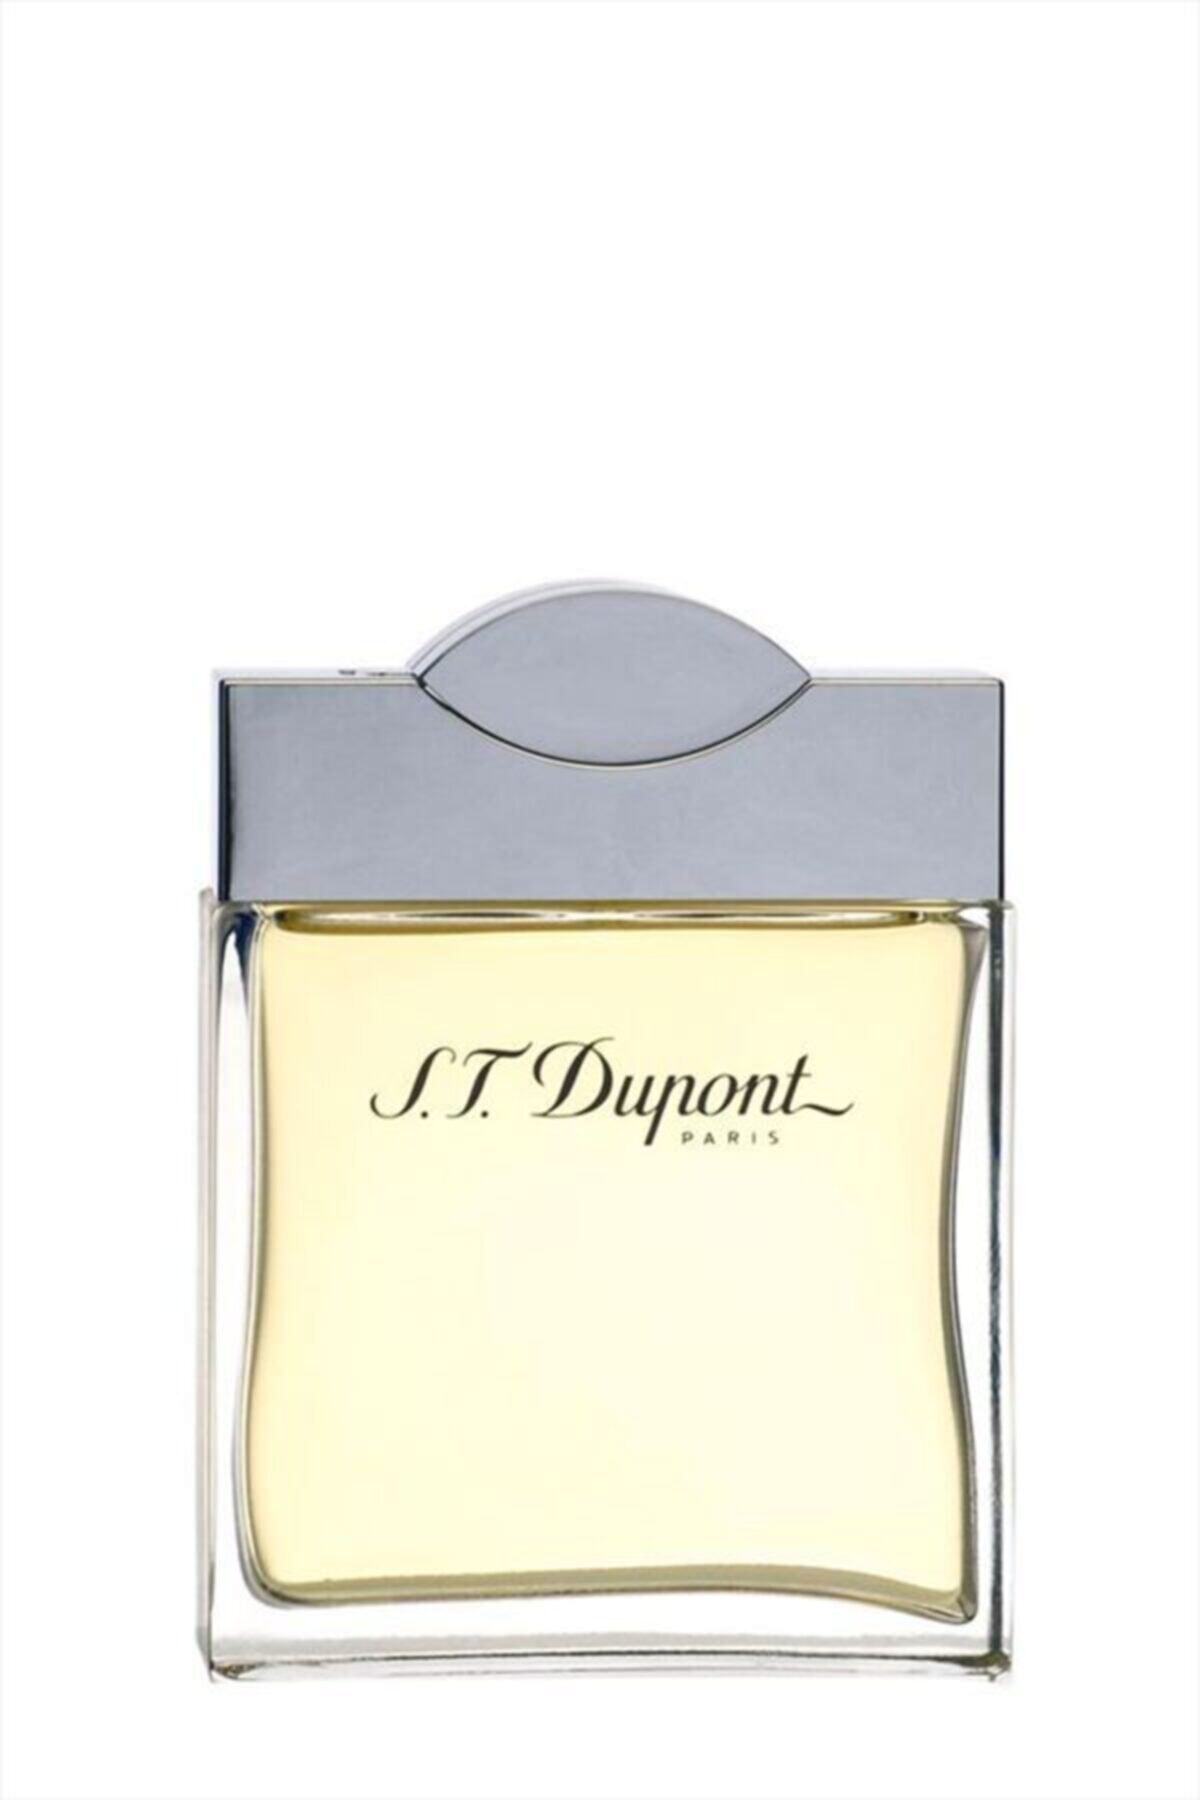 Dupont homme. S.T. Dupont Dupont (m) EDT 100 ml.. S.T.Dupont Парфюм мужской. S T Dupont туалетная вода. S.T. Dupont pour homme s.t. Dupont.